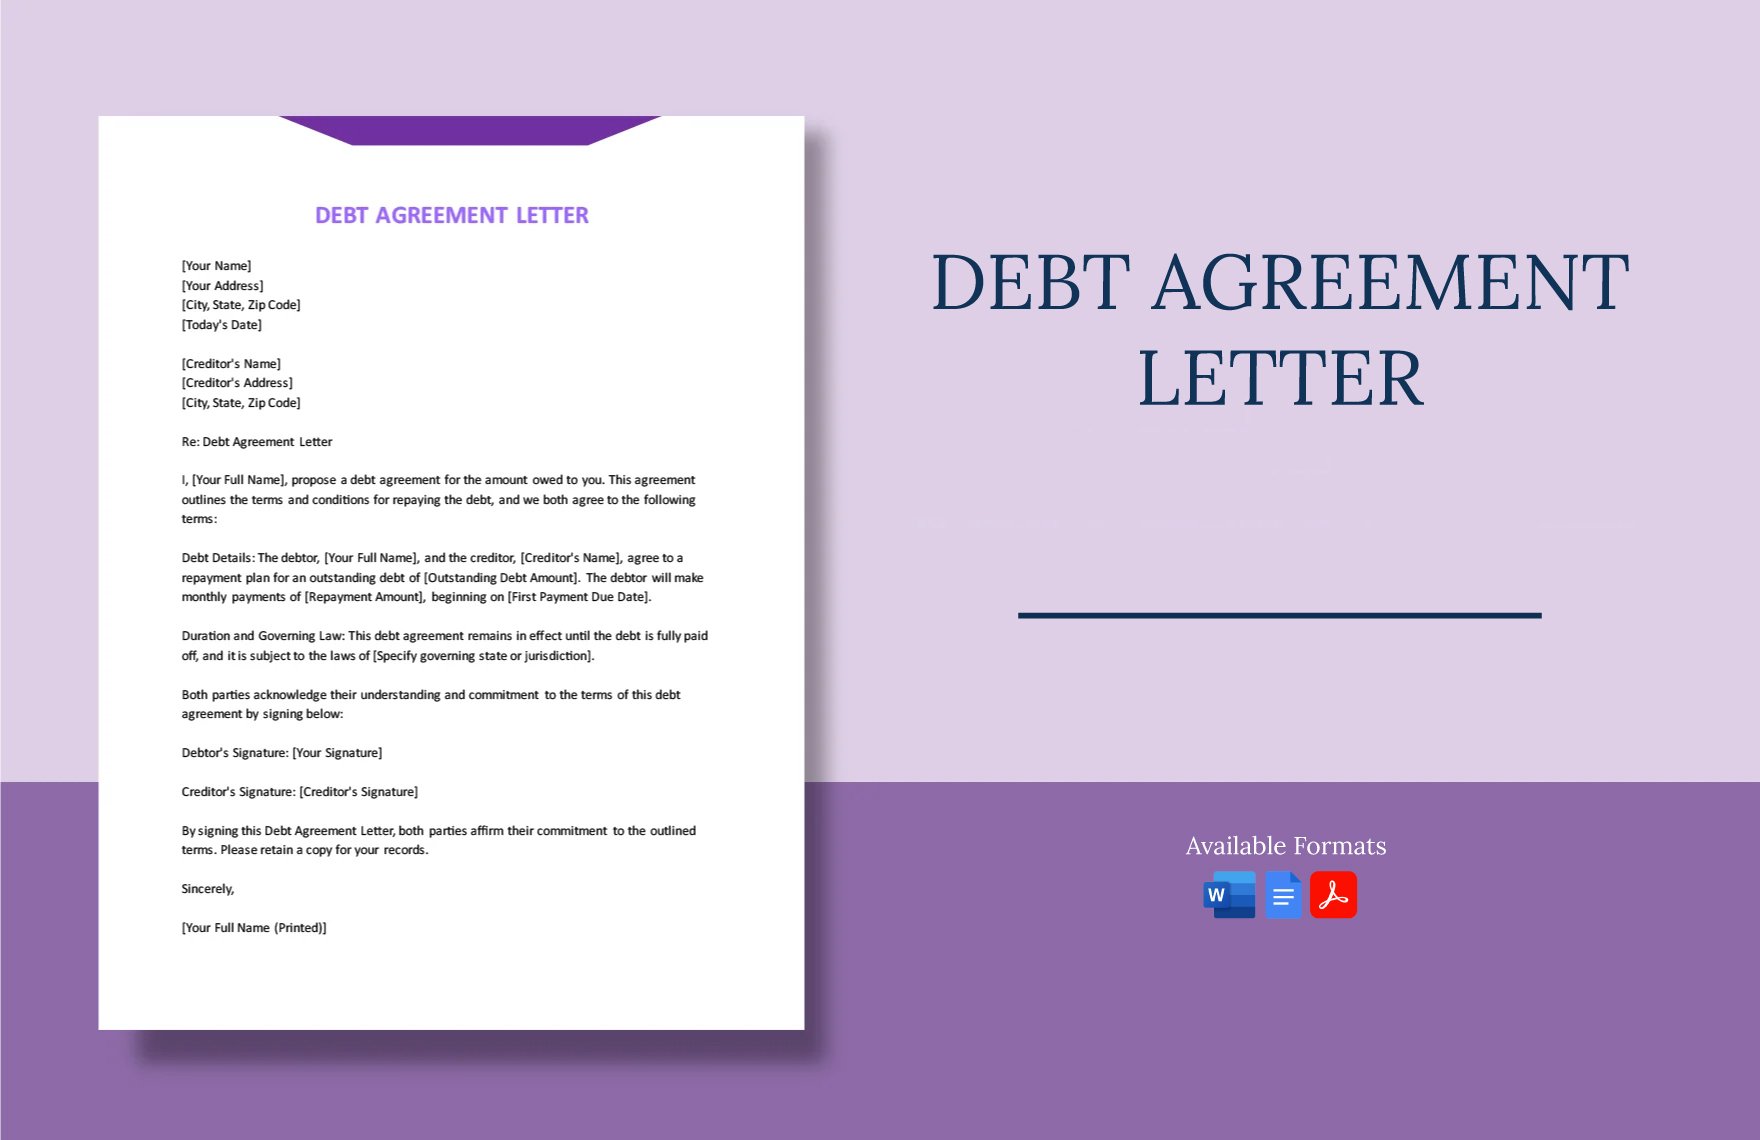 Debt Agreement Letter in Word, Google Docs, PDF